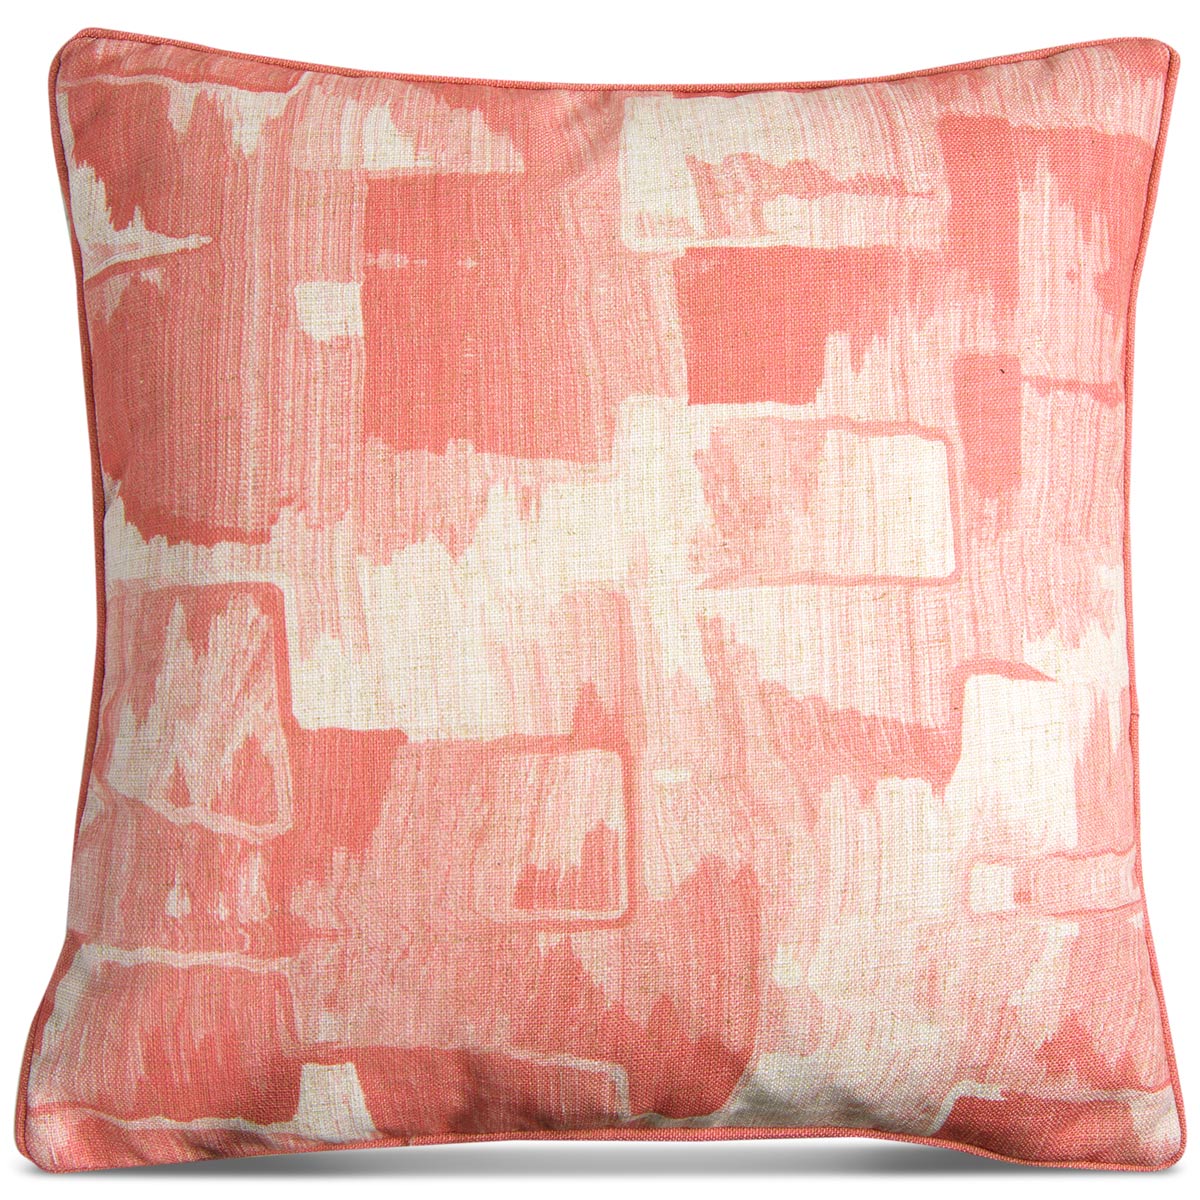 Denim Abstract Pillow in Blush - ModShop1.com